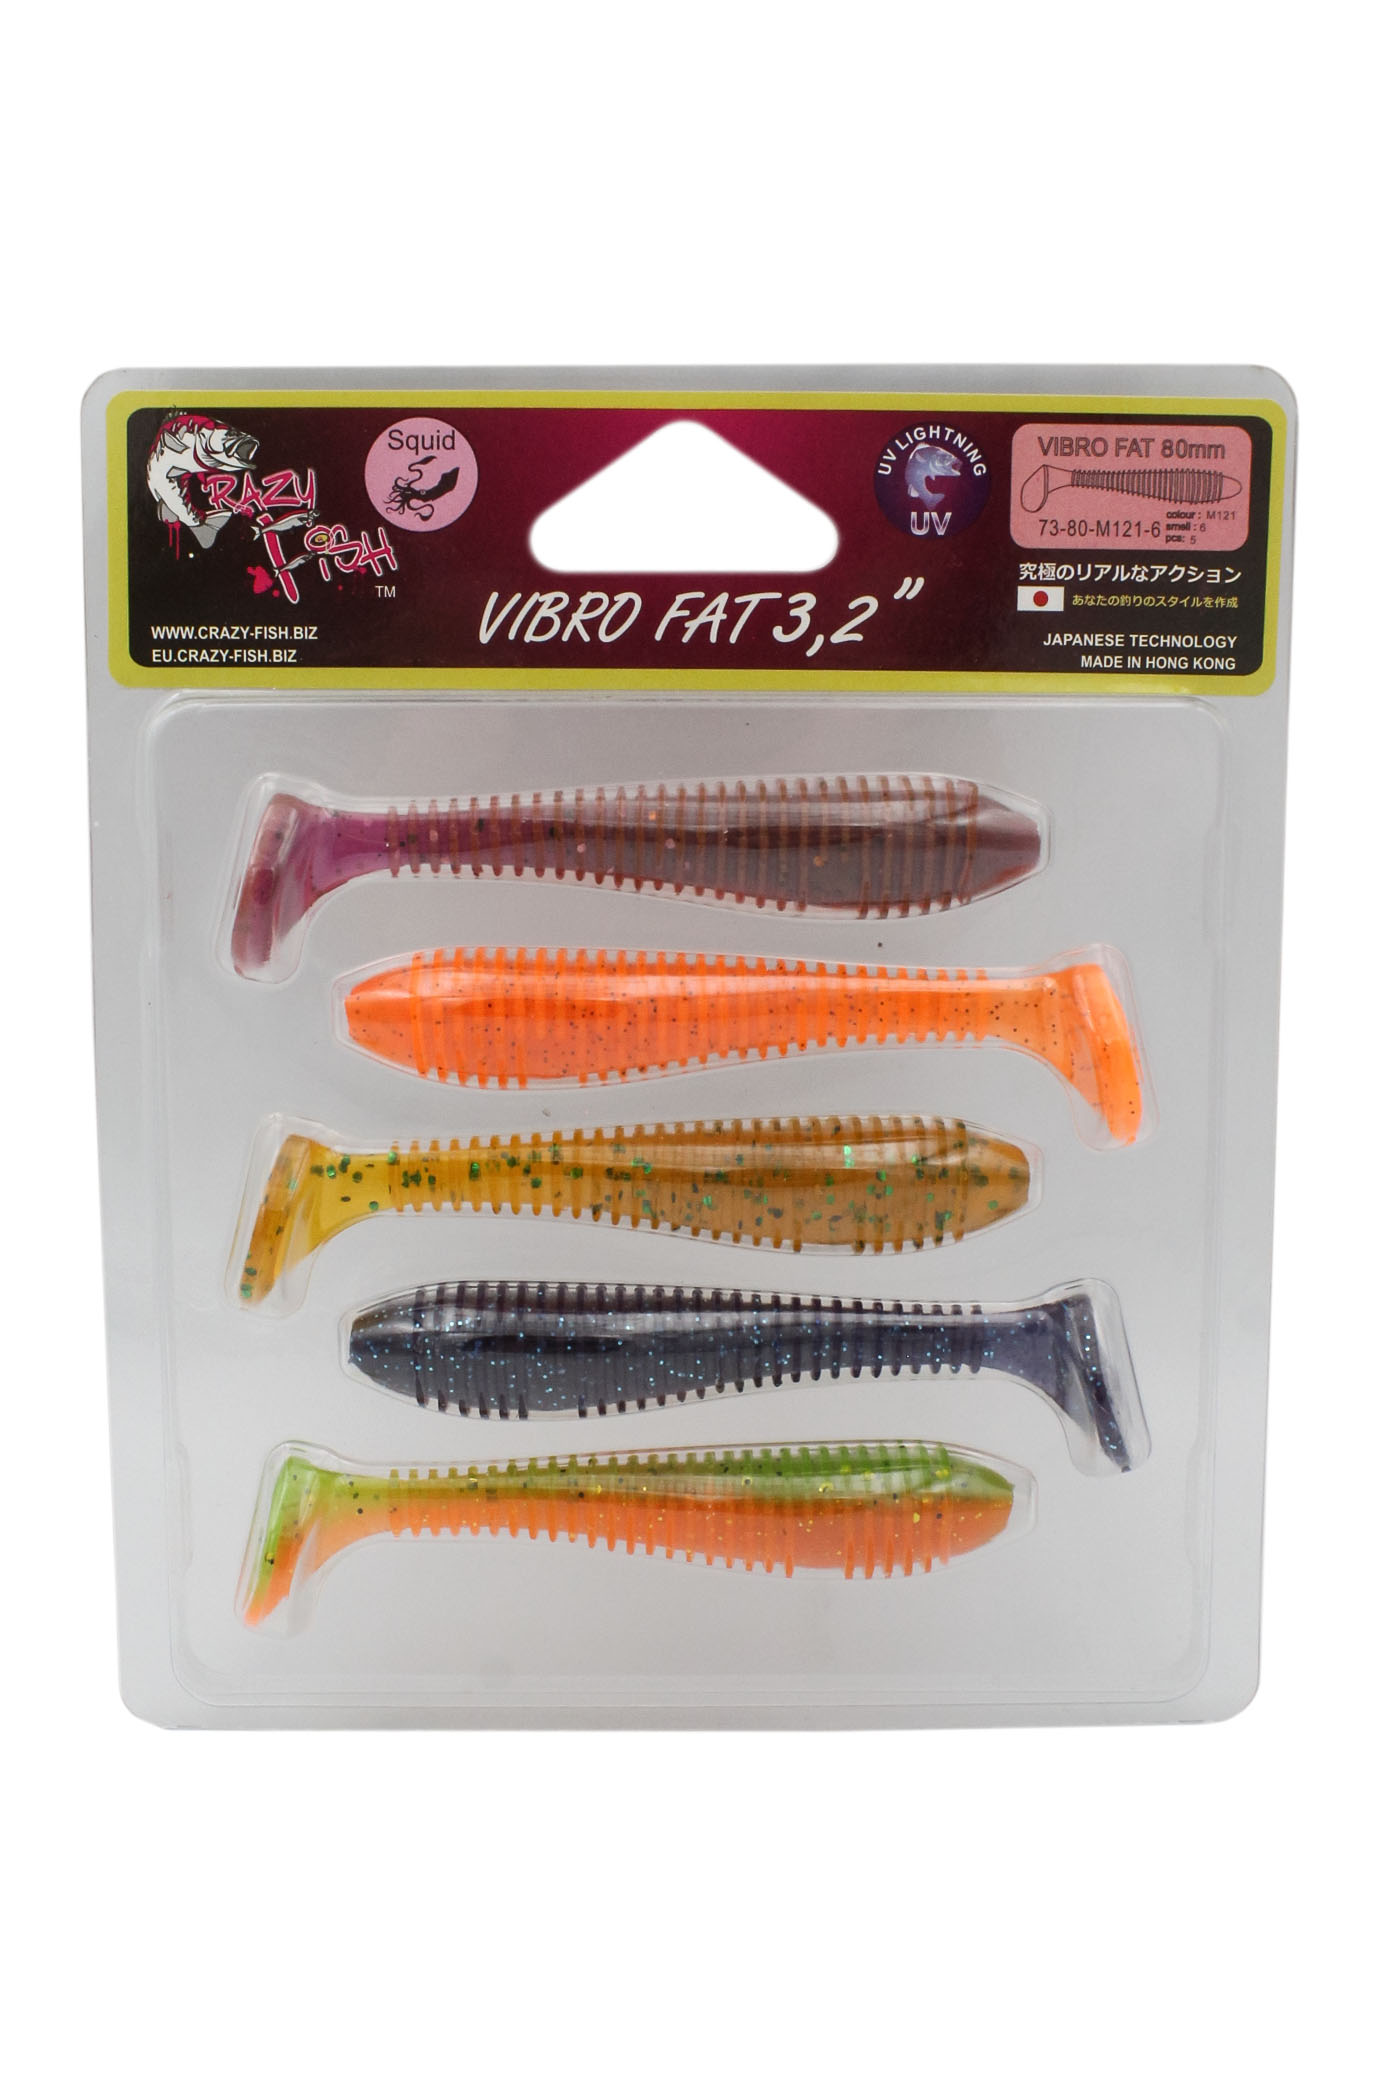 Приманка Crazy Fish Vibro fat 3.2'' 73-80-M121-6 - фото 1